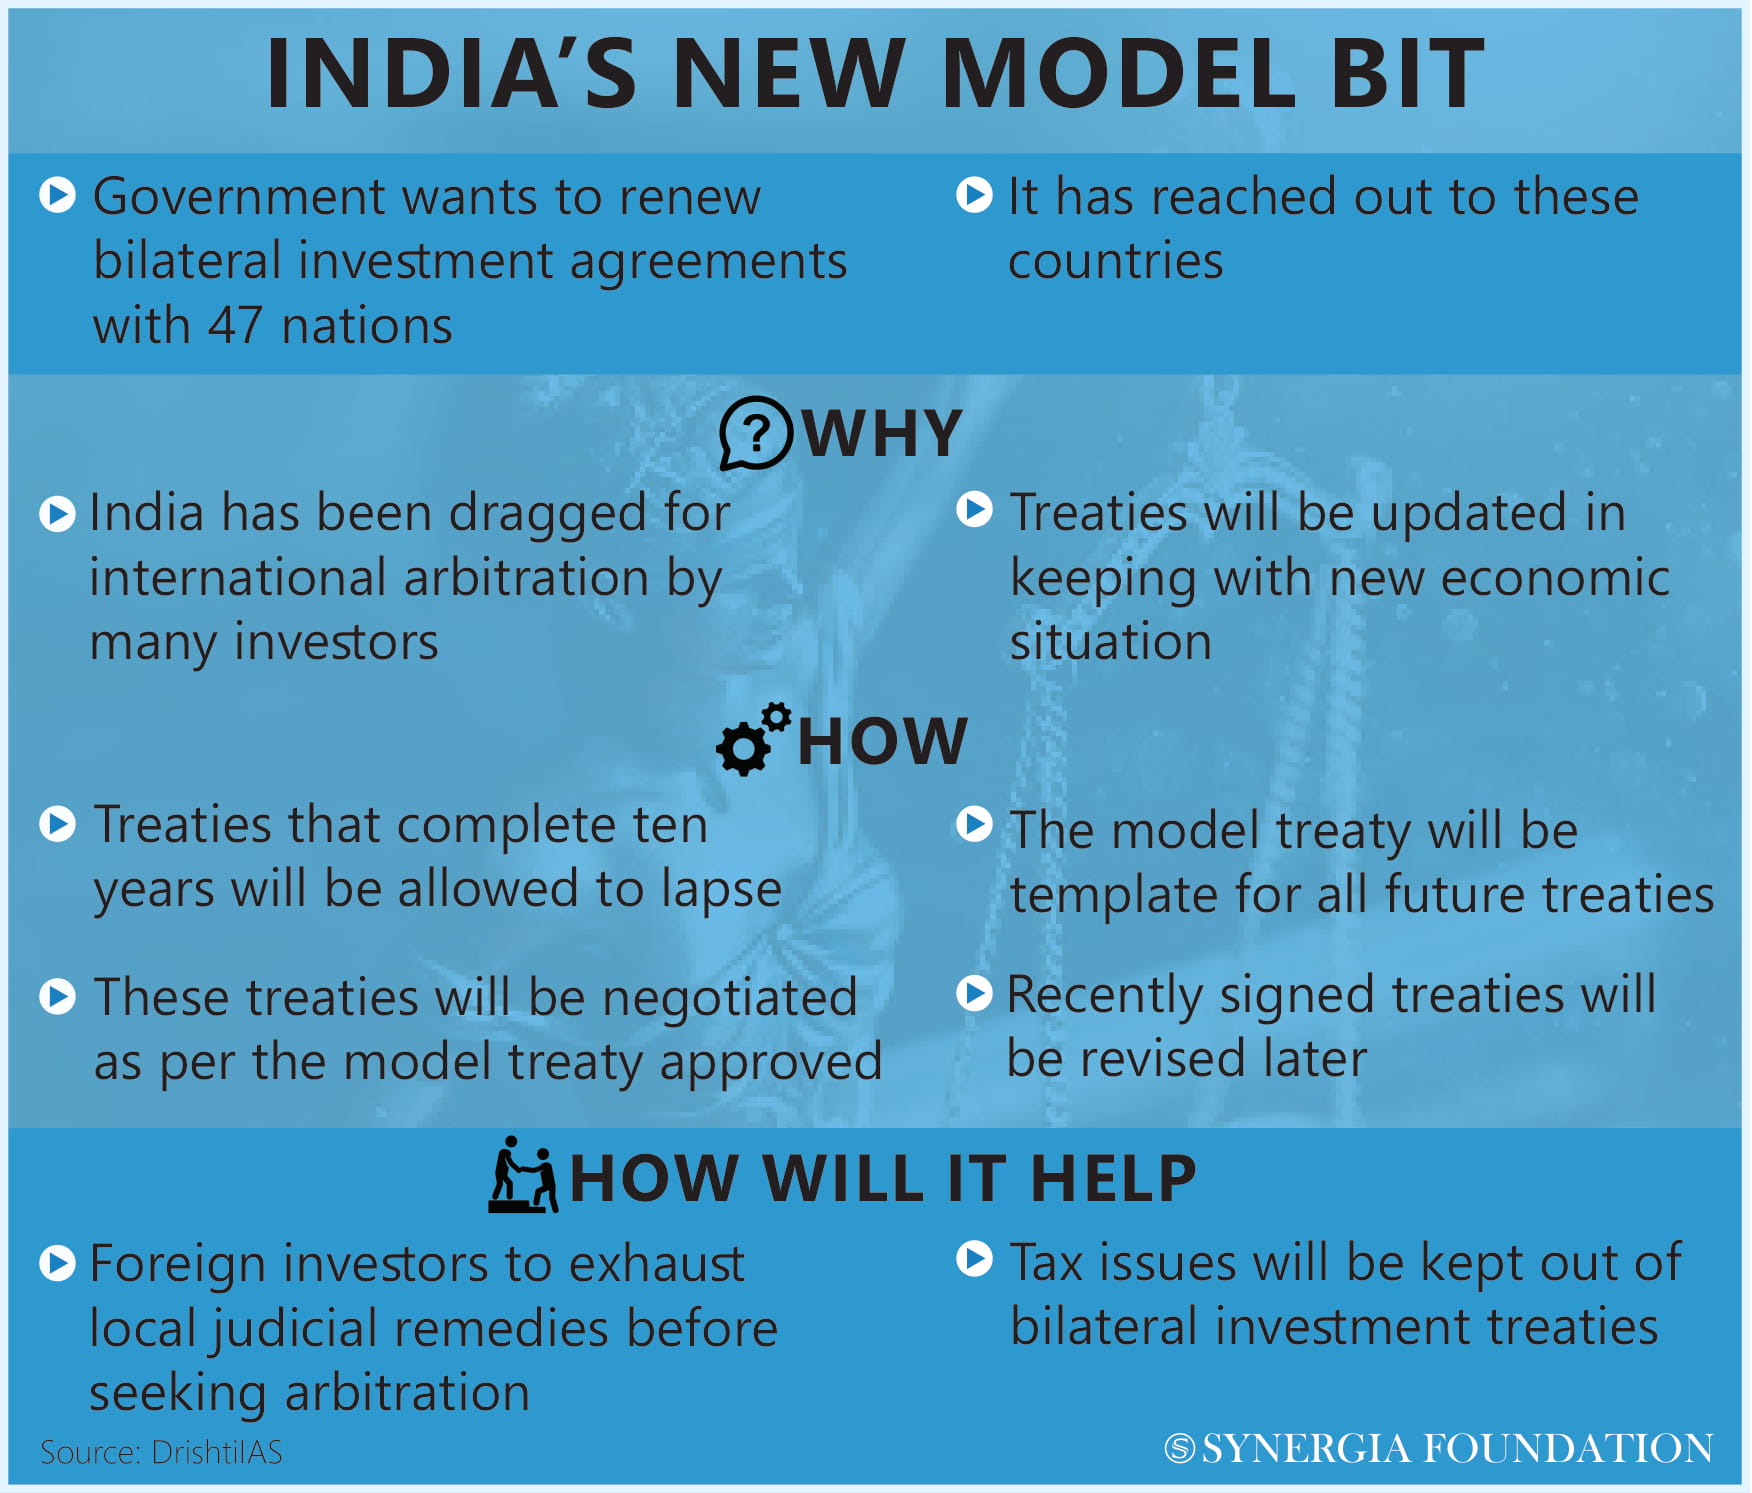 India's new model BIT